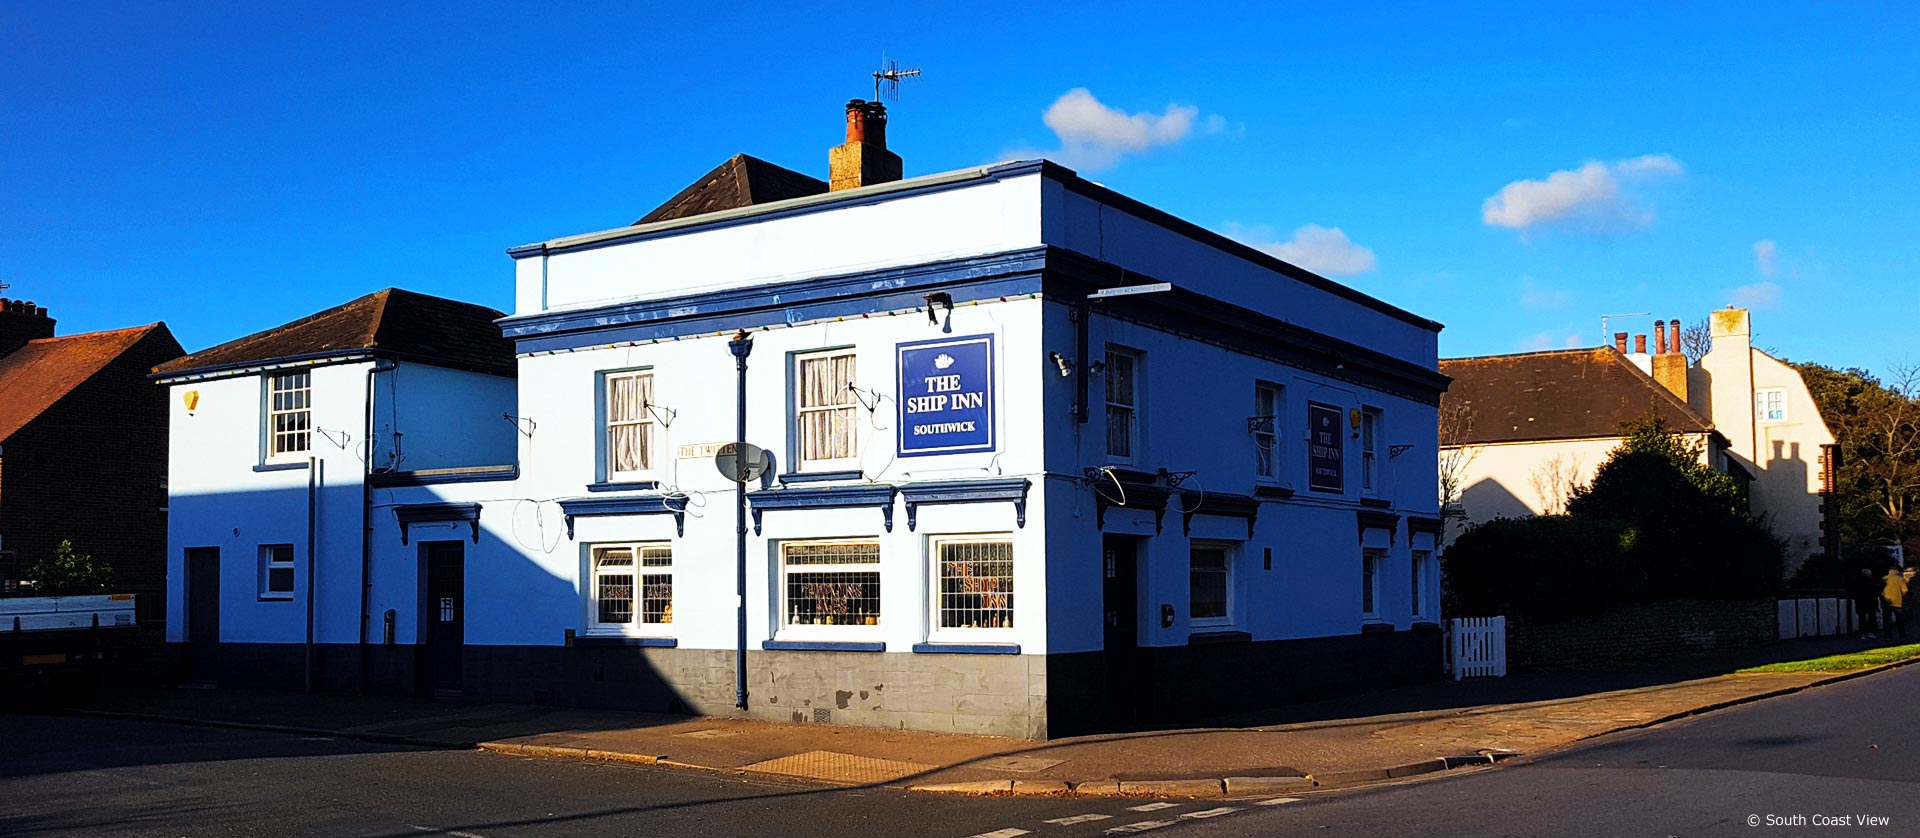 The Ship Inn Southwick